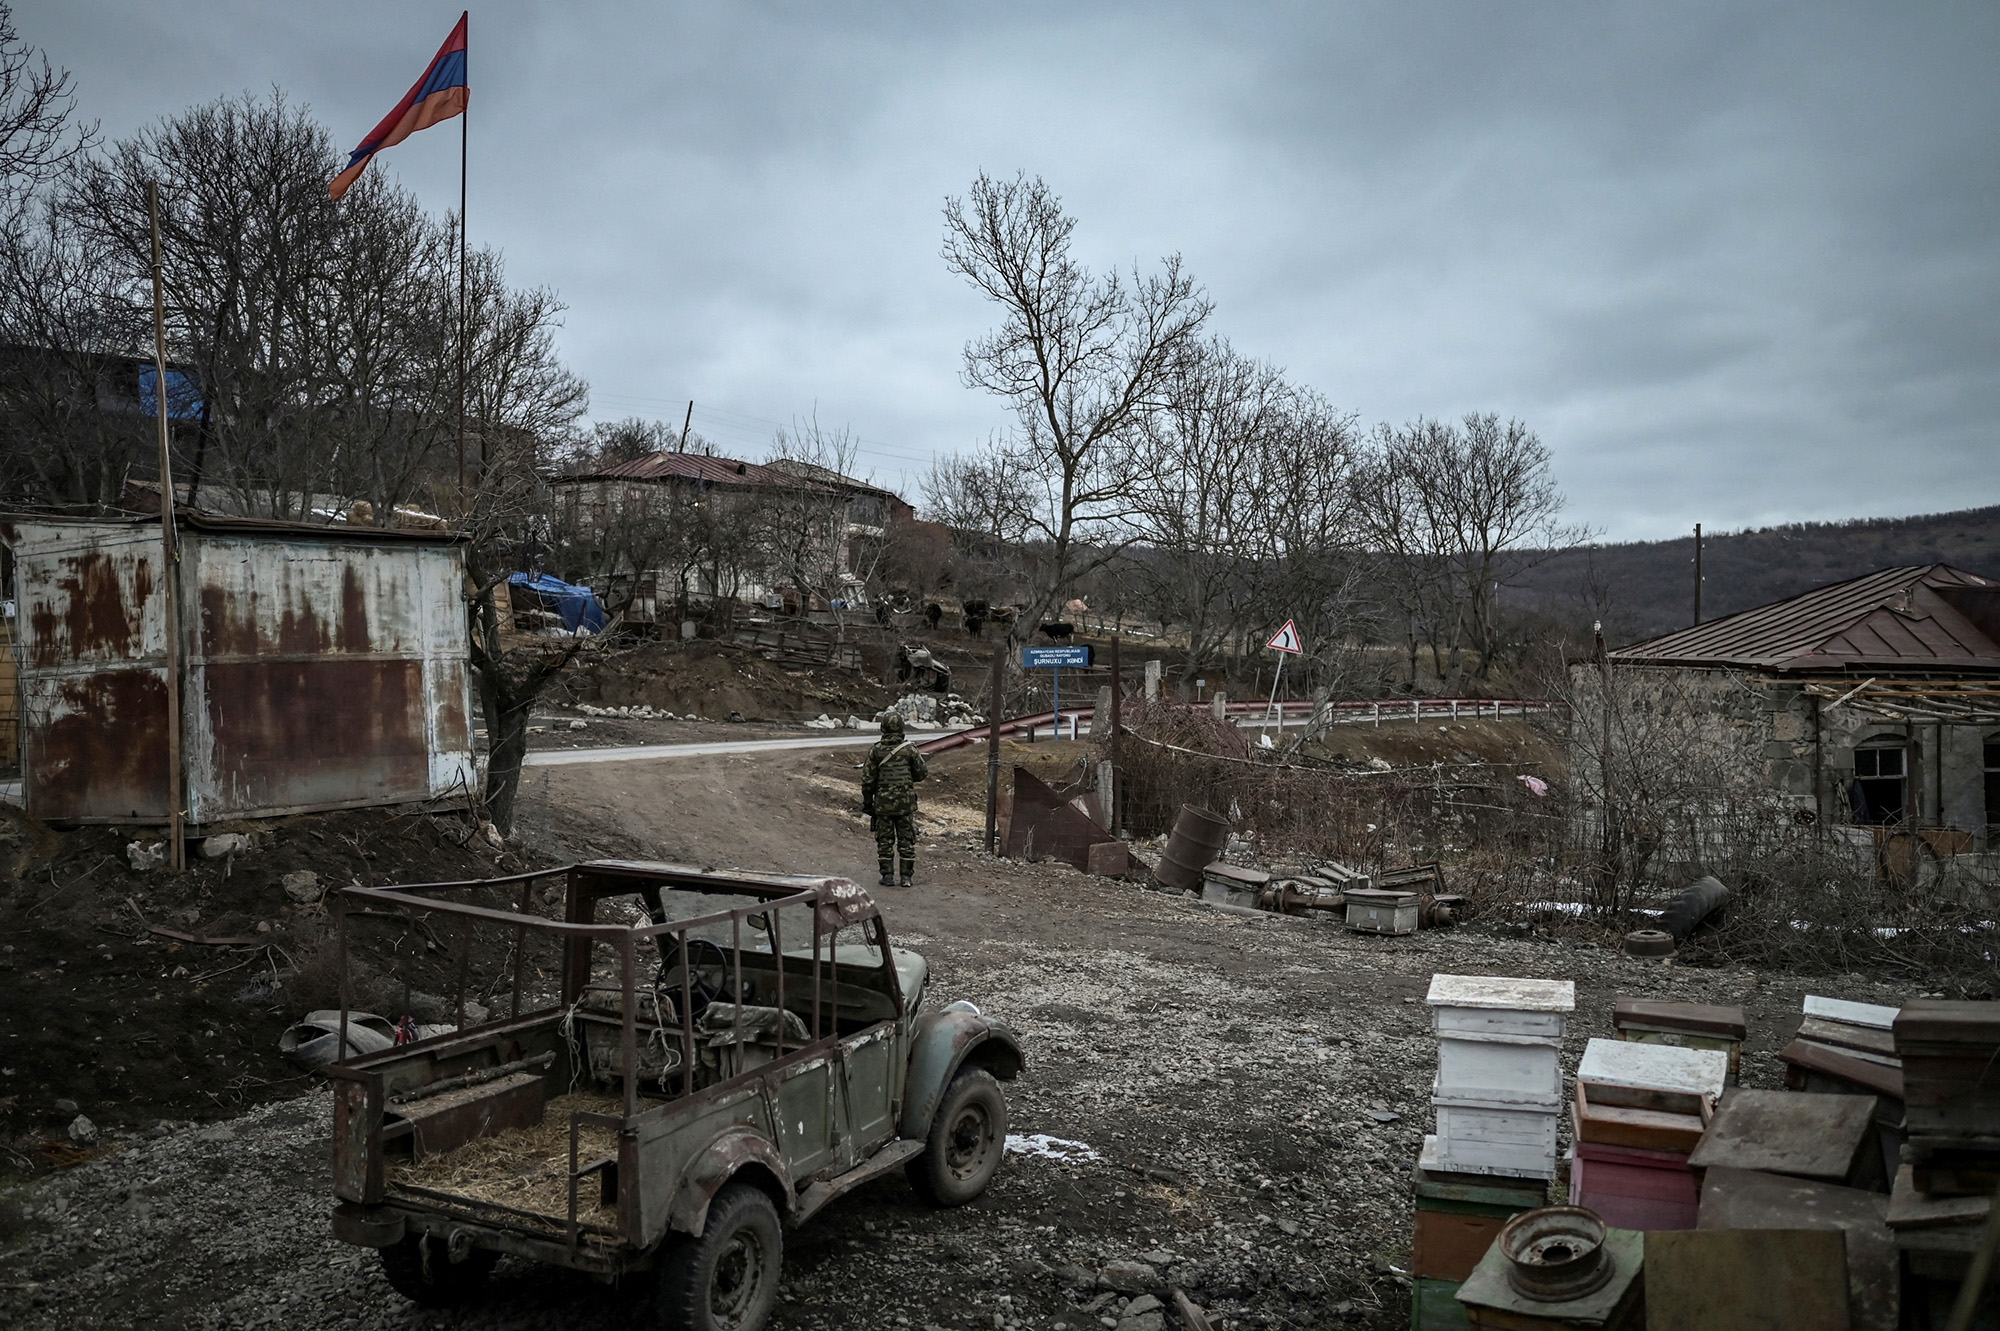 Armenia and Azerbaijan's new-old border war, Conflict News